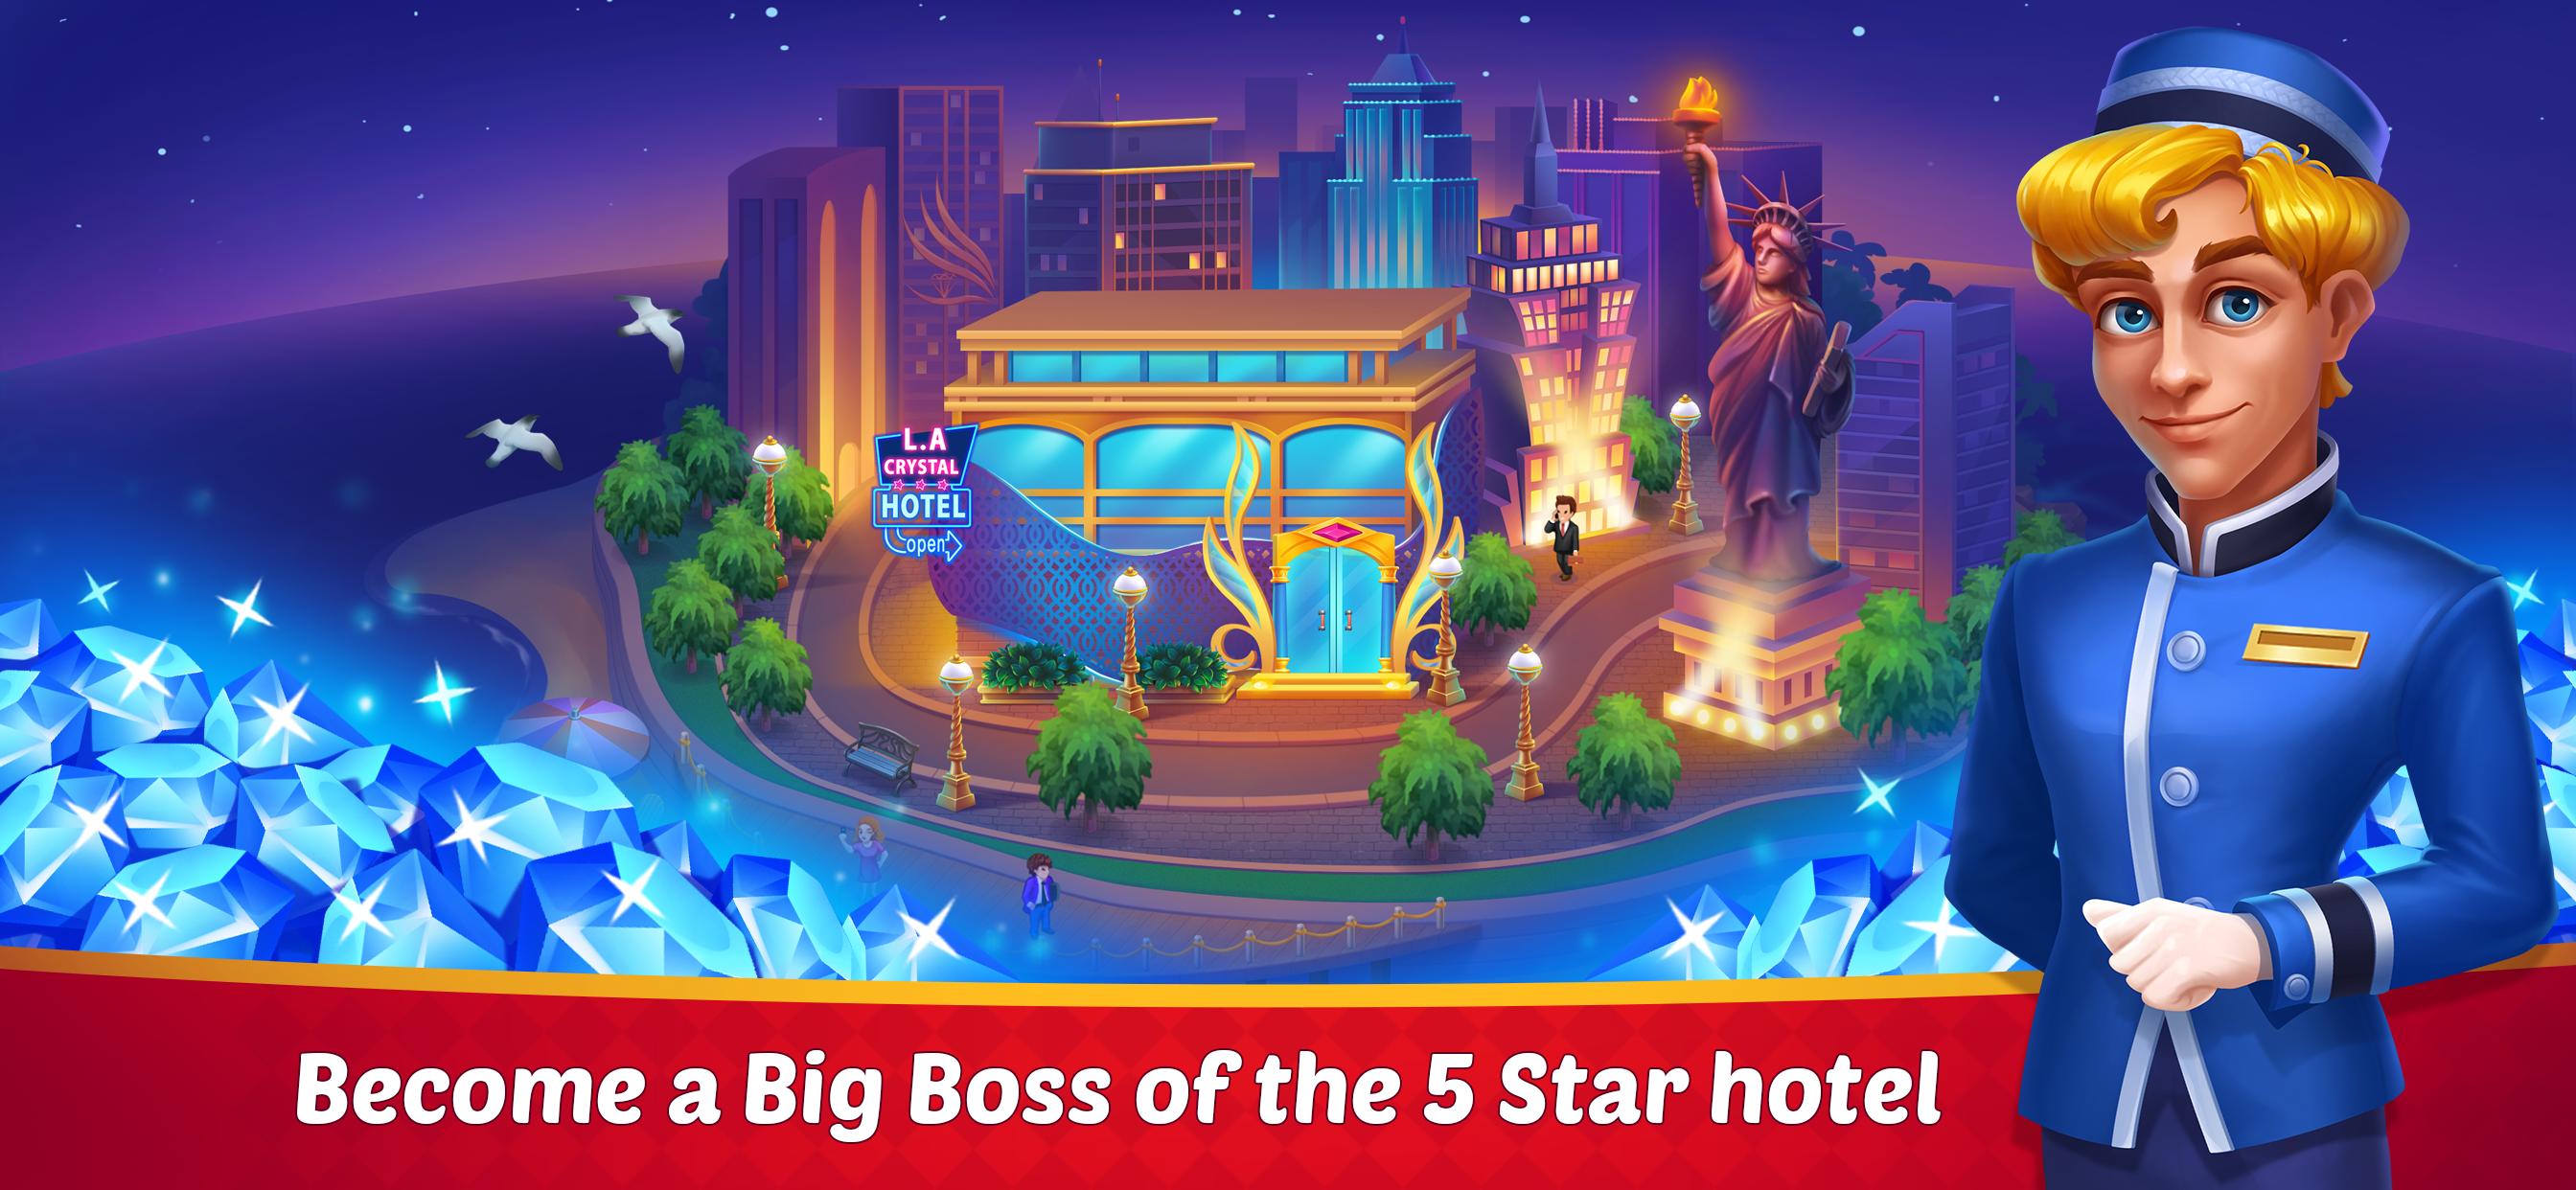 Dream Hotel Hotel Manager Simulation games 1.2.4 Screenshot 1